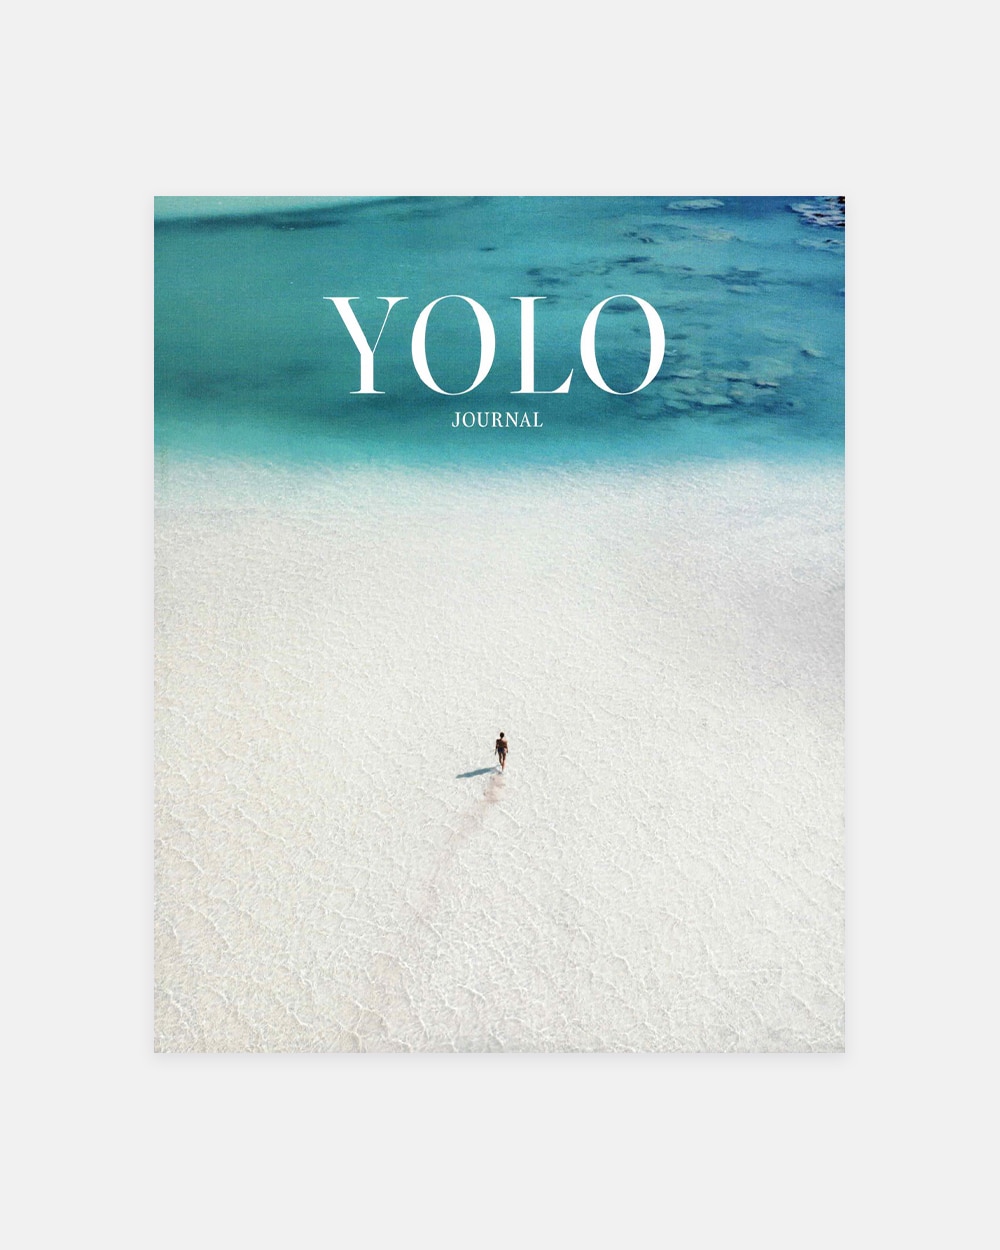 YOLO Journal - Summer 2020 - Vol.4 - Yolanda Edwards